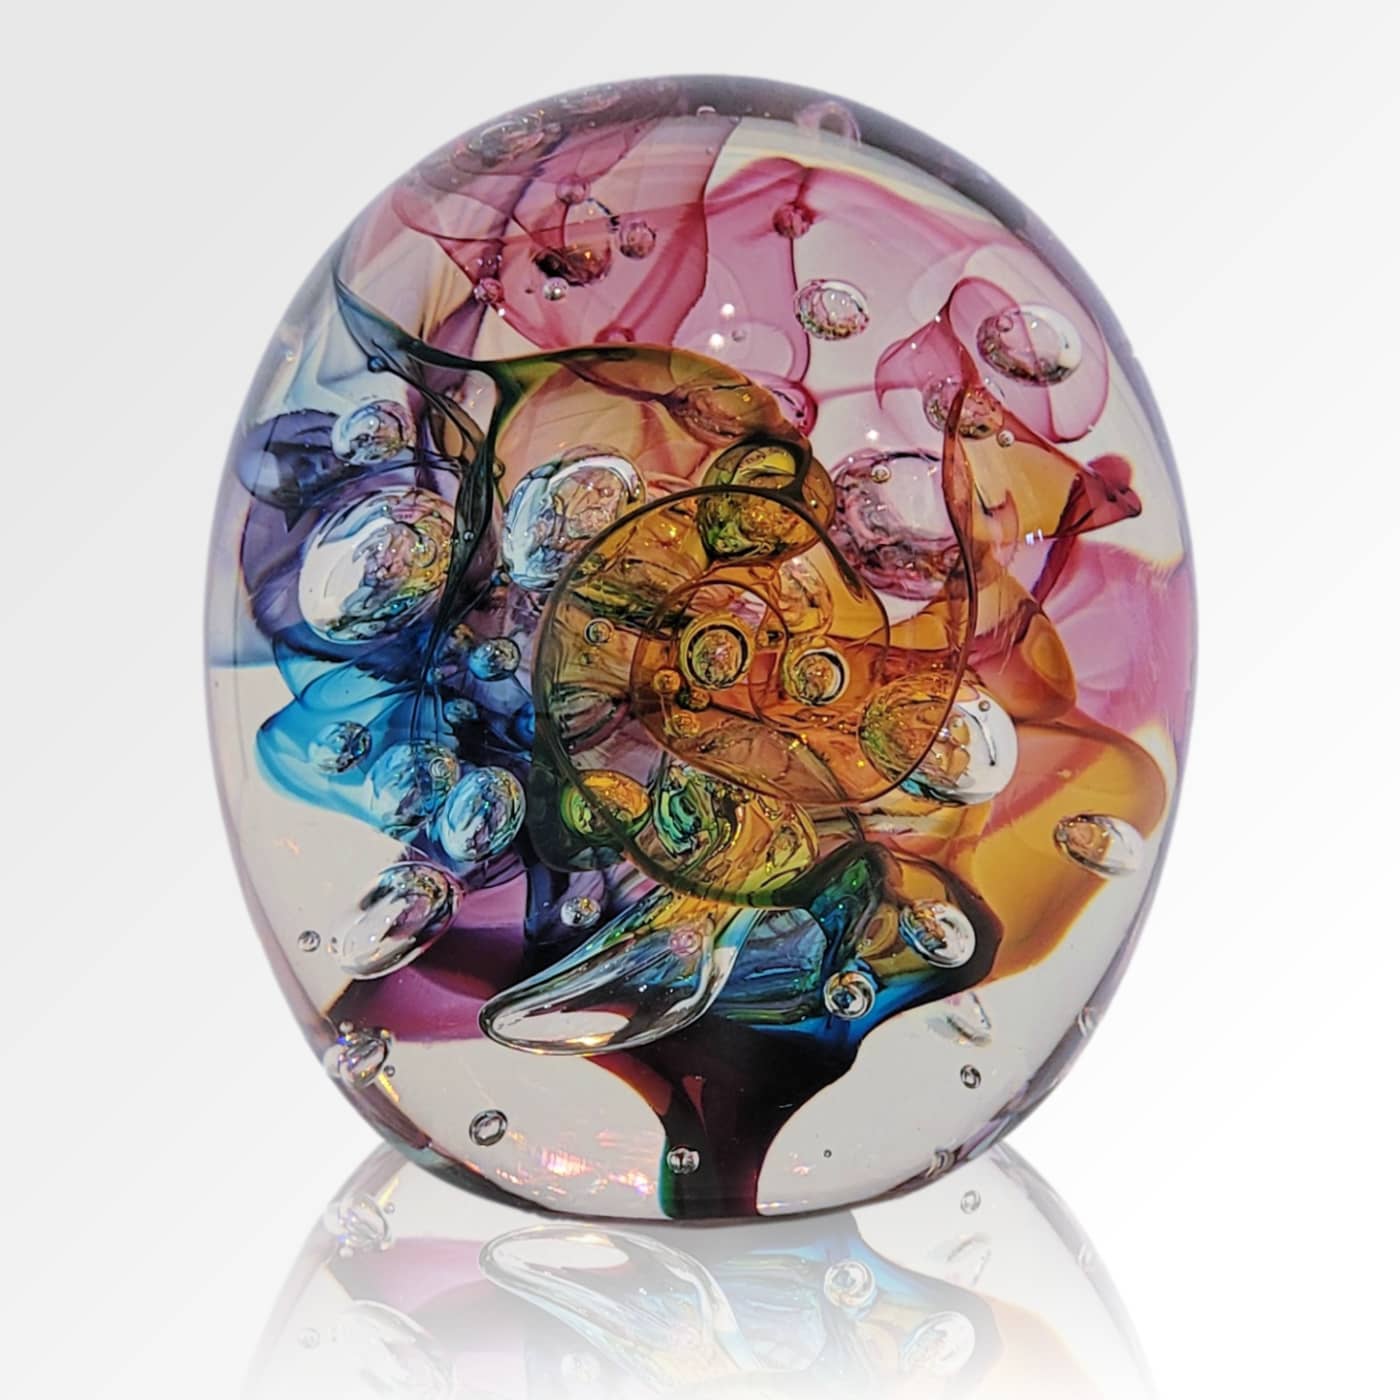 Peninsula-Based Australian Glass Artist Roberta Easton ~ 'Bubbly Sphere, Kaleidoscope' - Curate Art & Design Gallery Sorrento Mornington Peninsula Melbourne